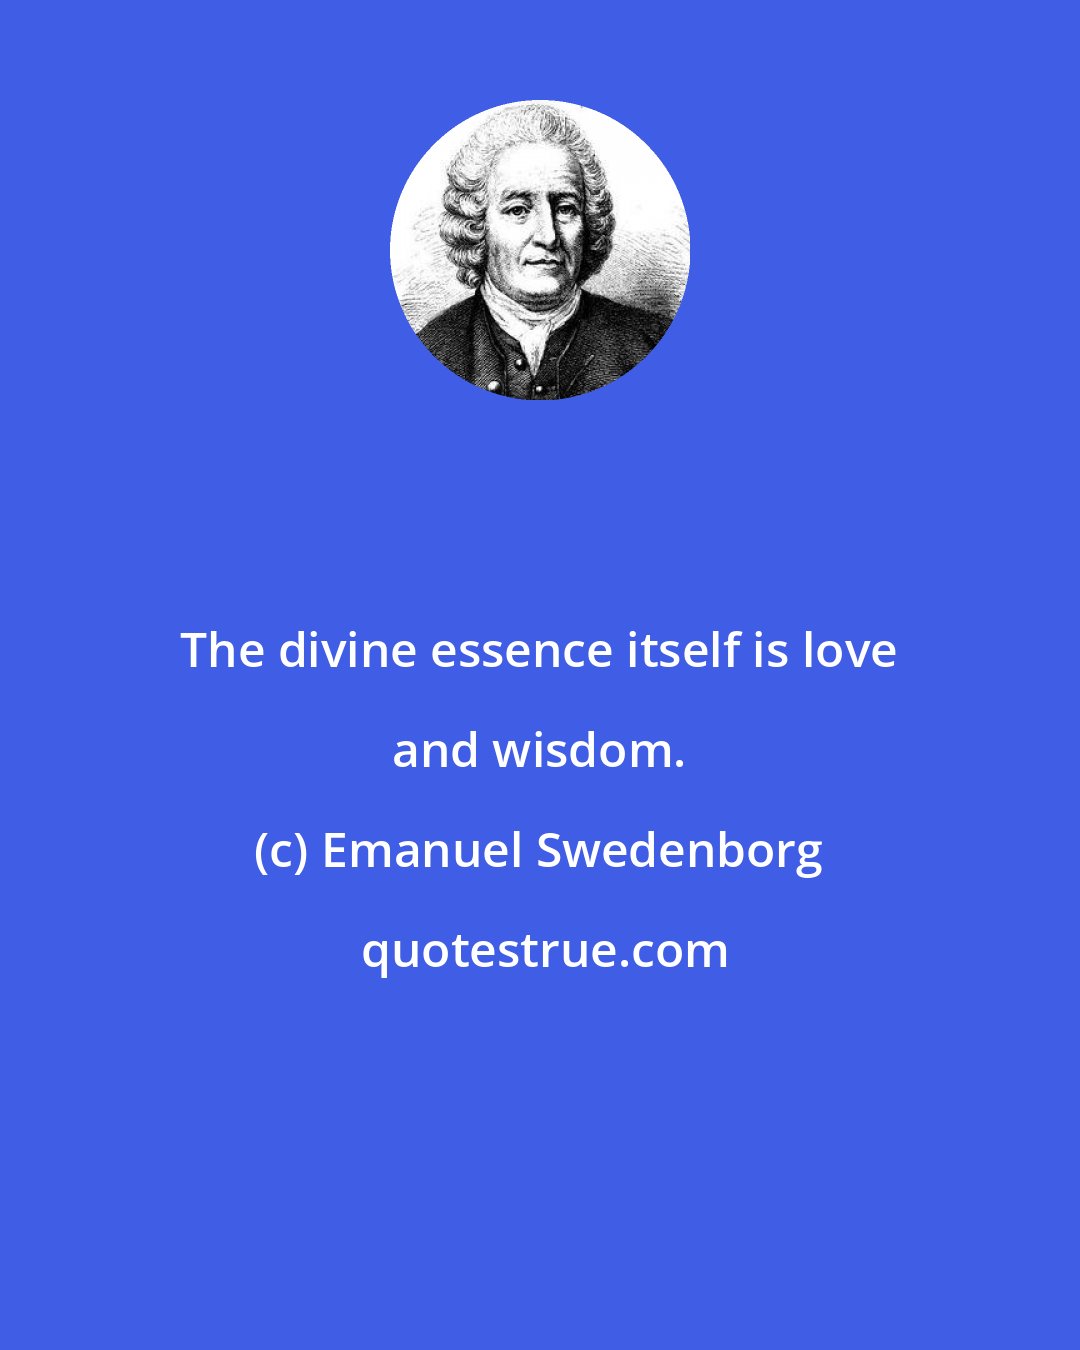 Emanuel Swedenborg: The divine essence itself is love and wisdom.